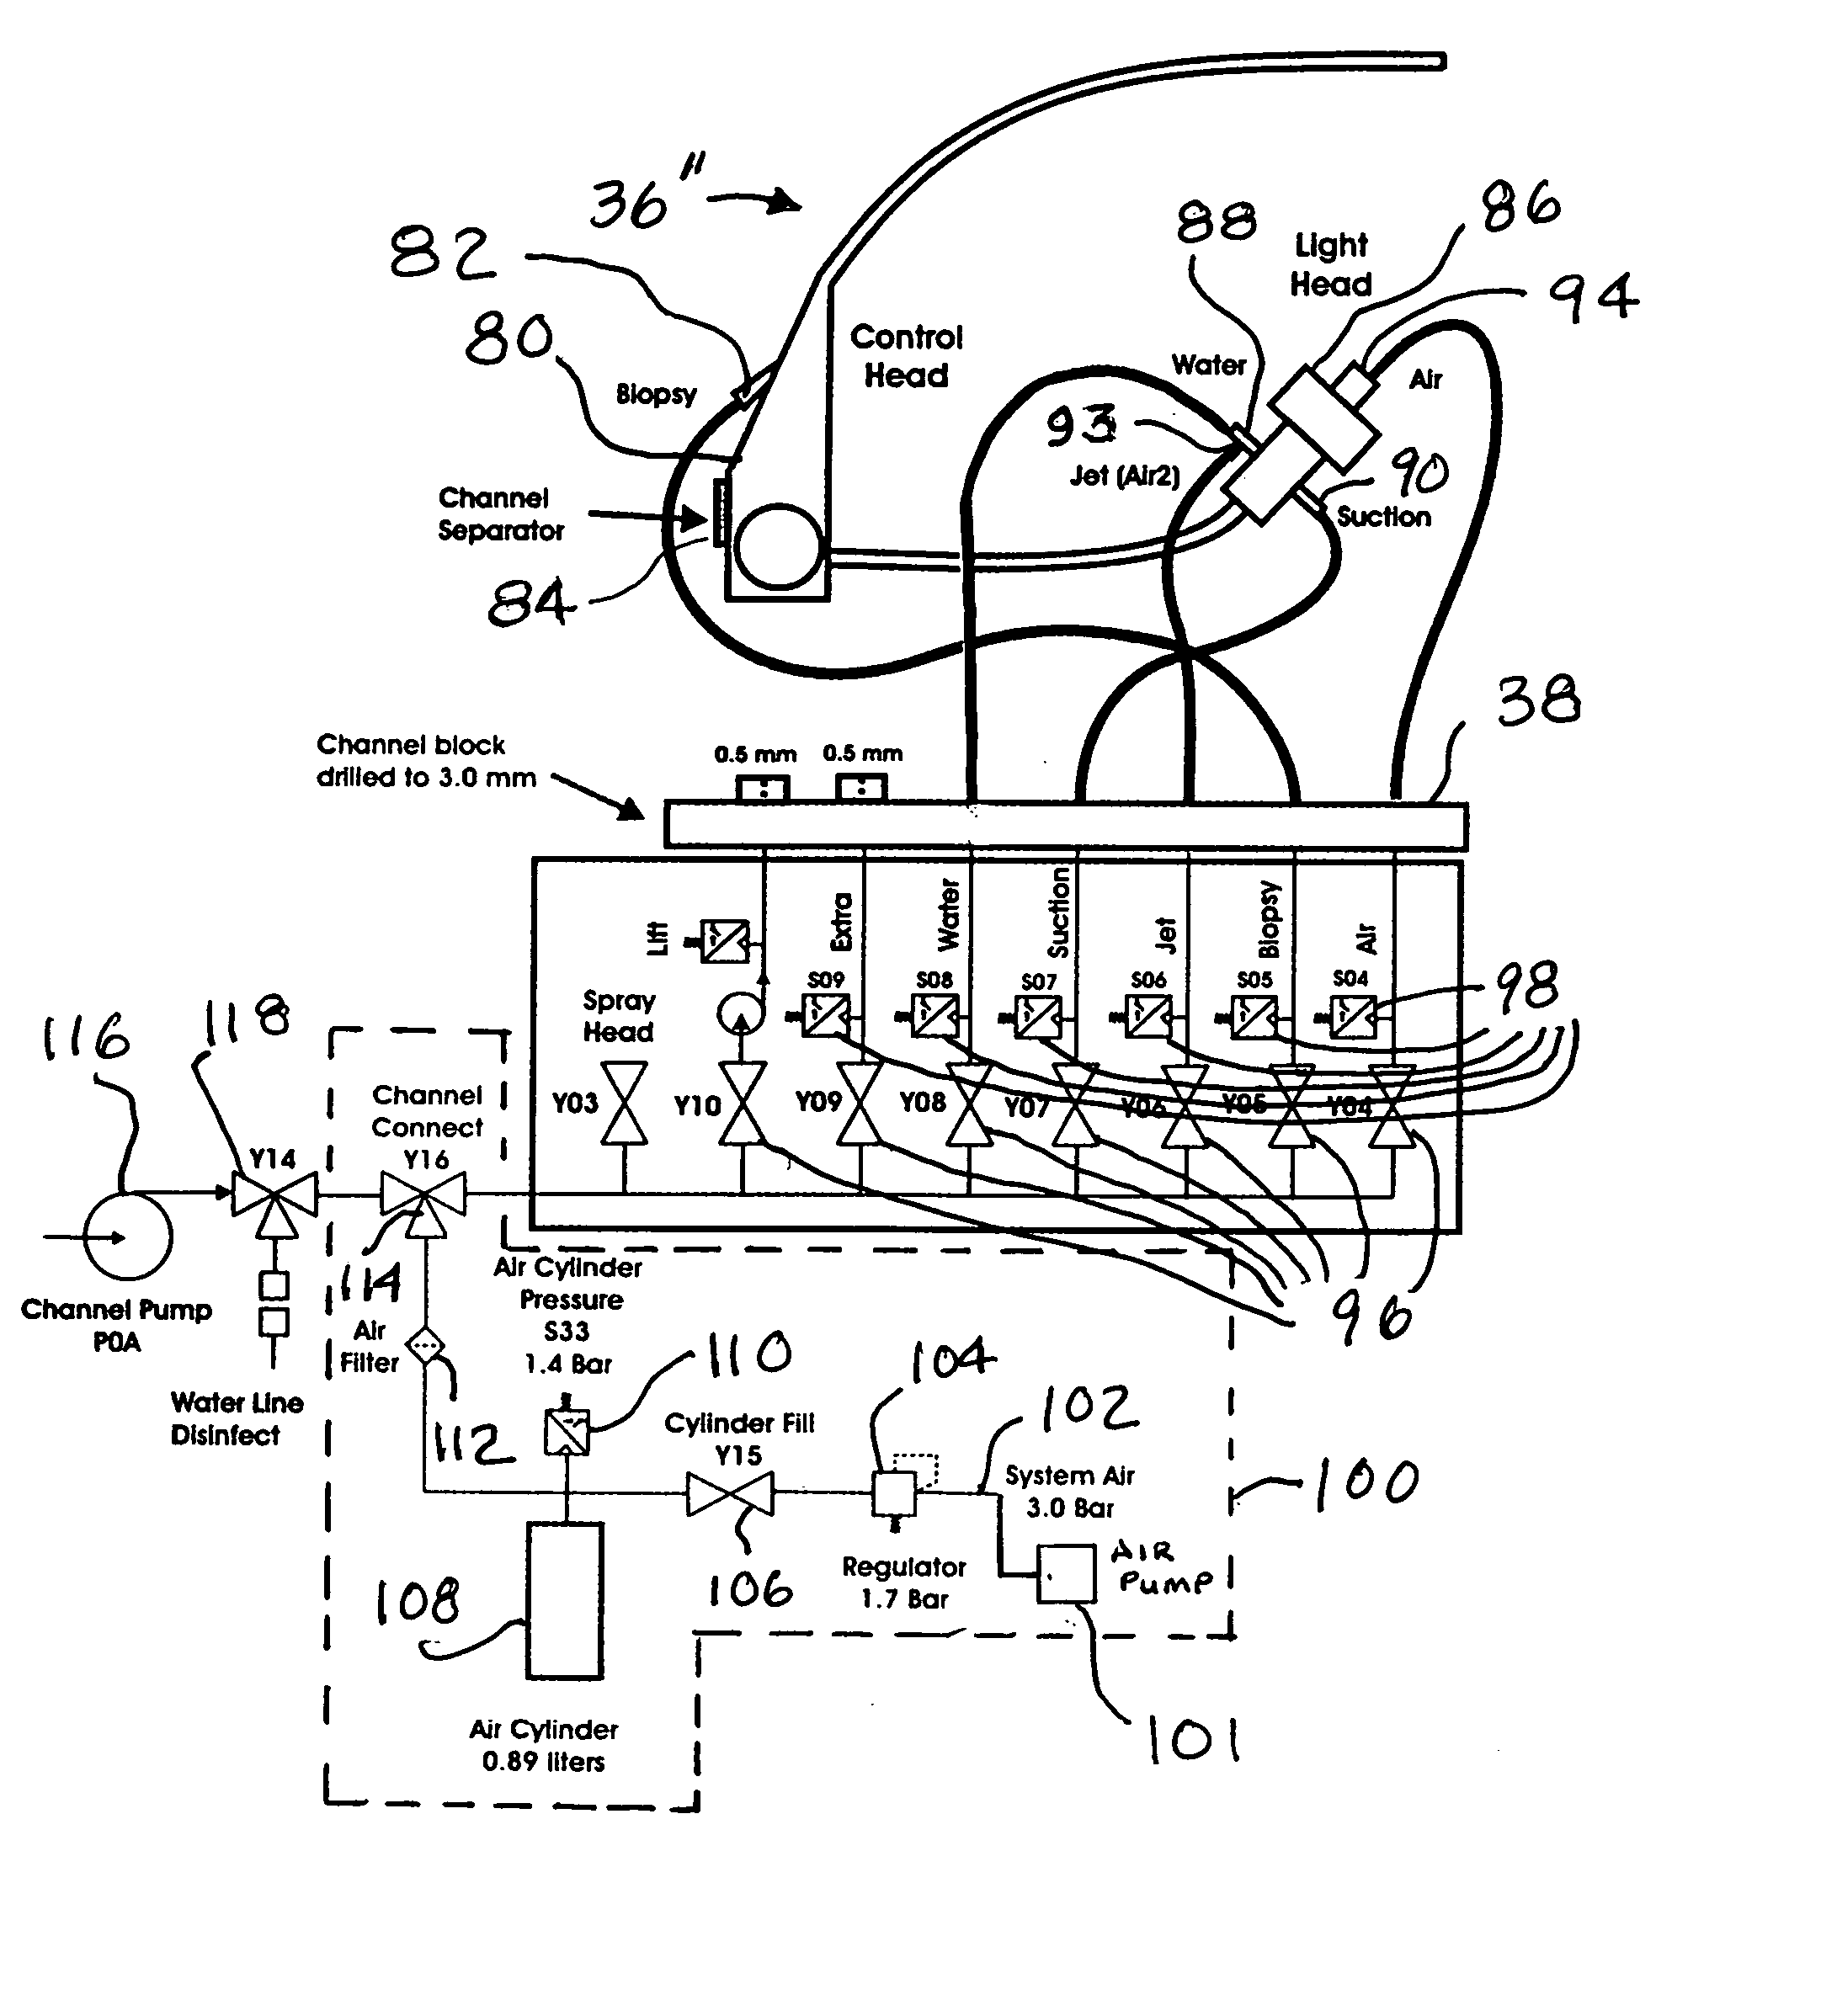 Endoscope reprocessor connectivity apparatus and method